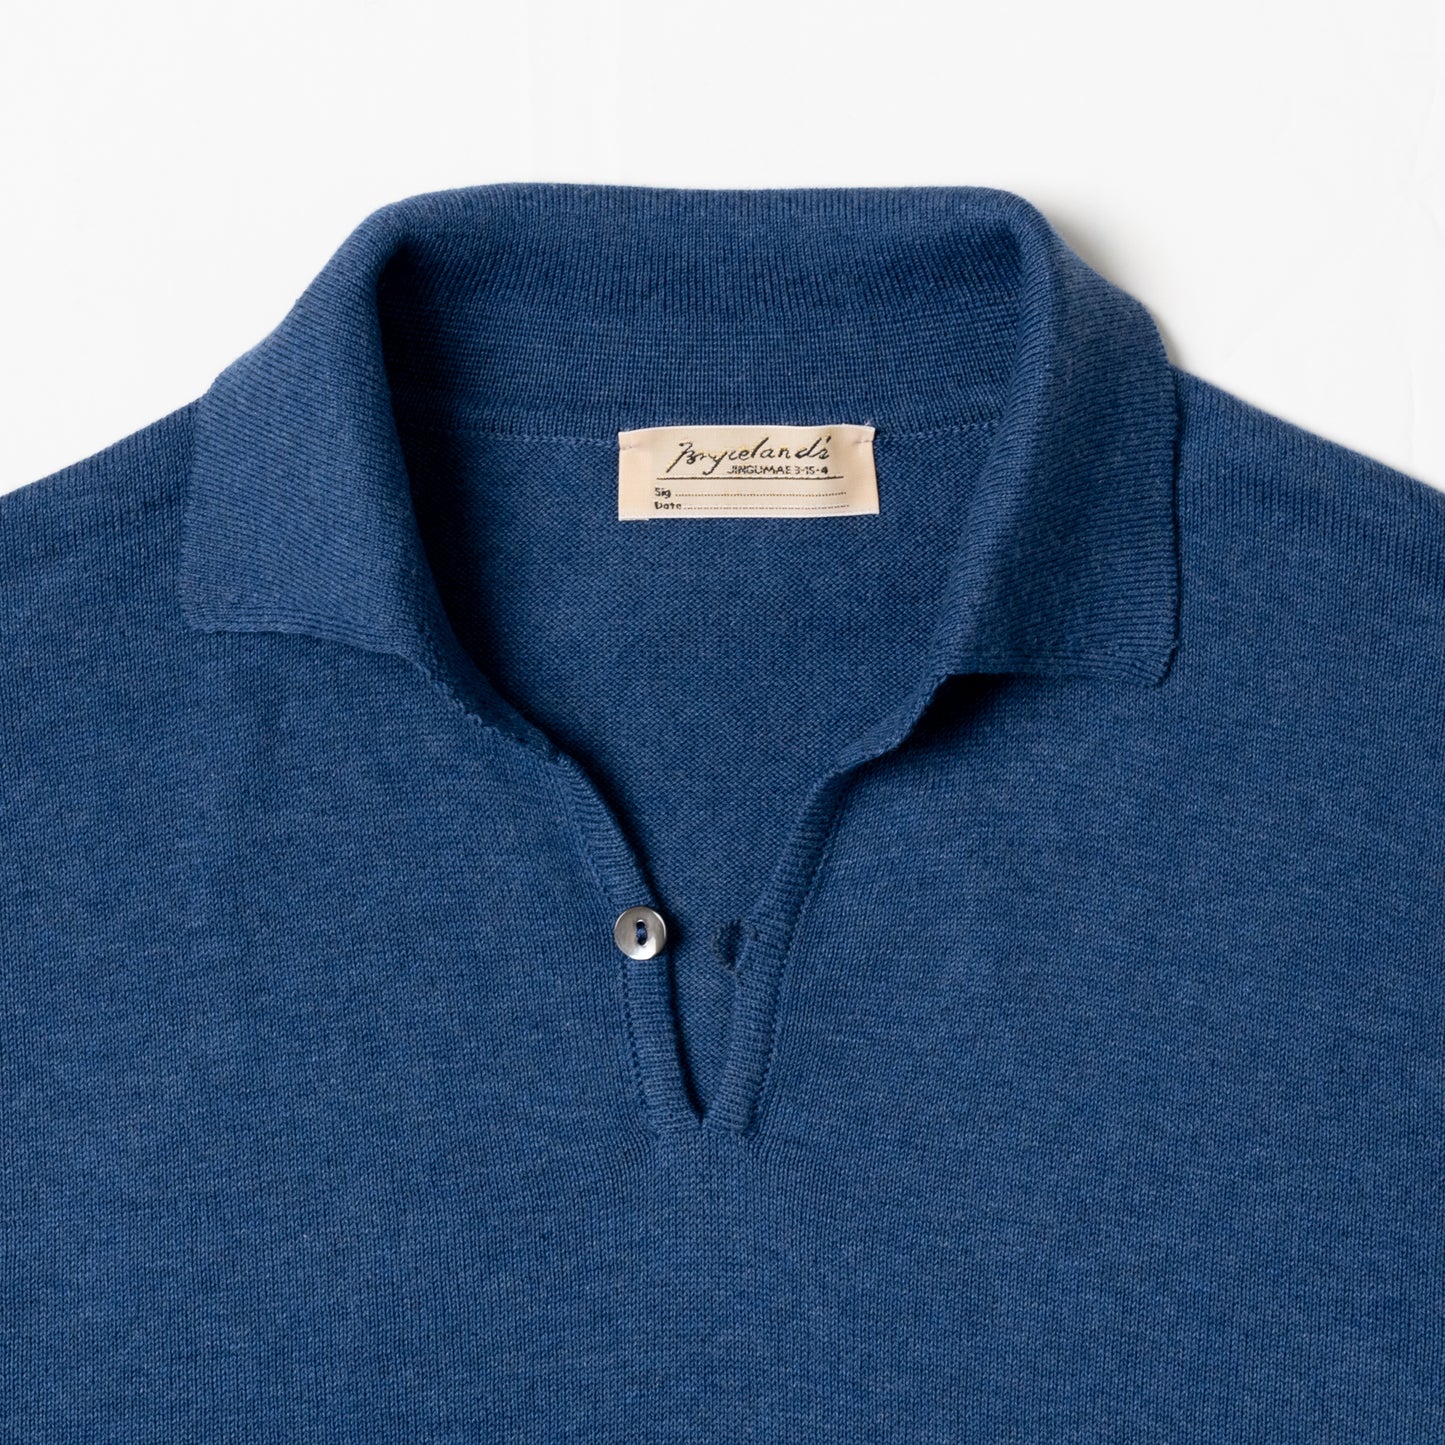 Bryceland's Cotton Short Sleeve ‘Skipper’ Polo Navy – Bryceland's London